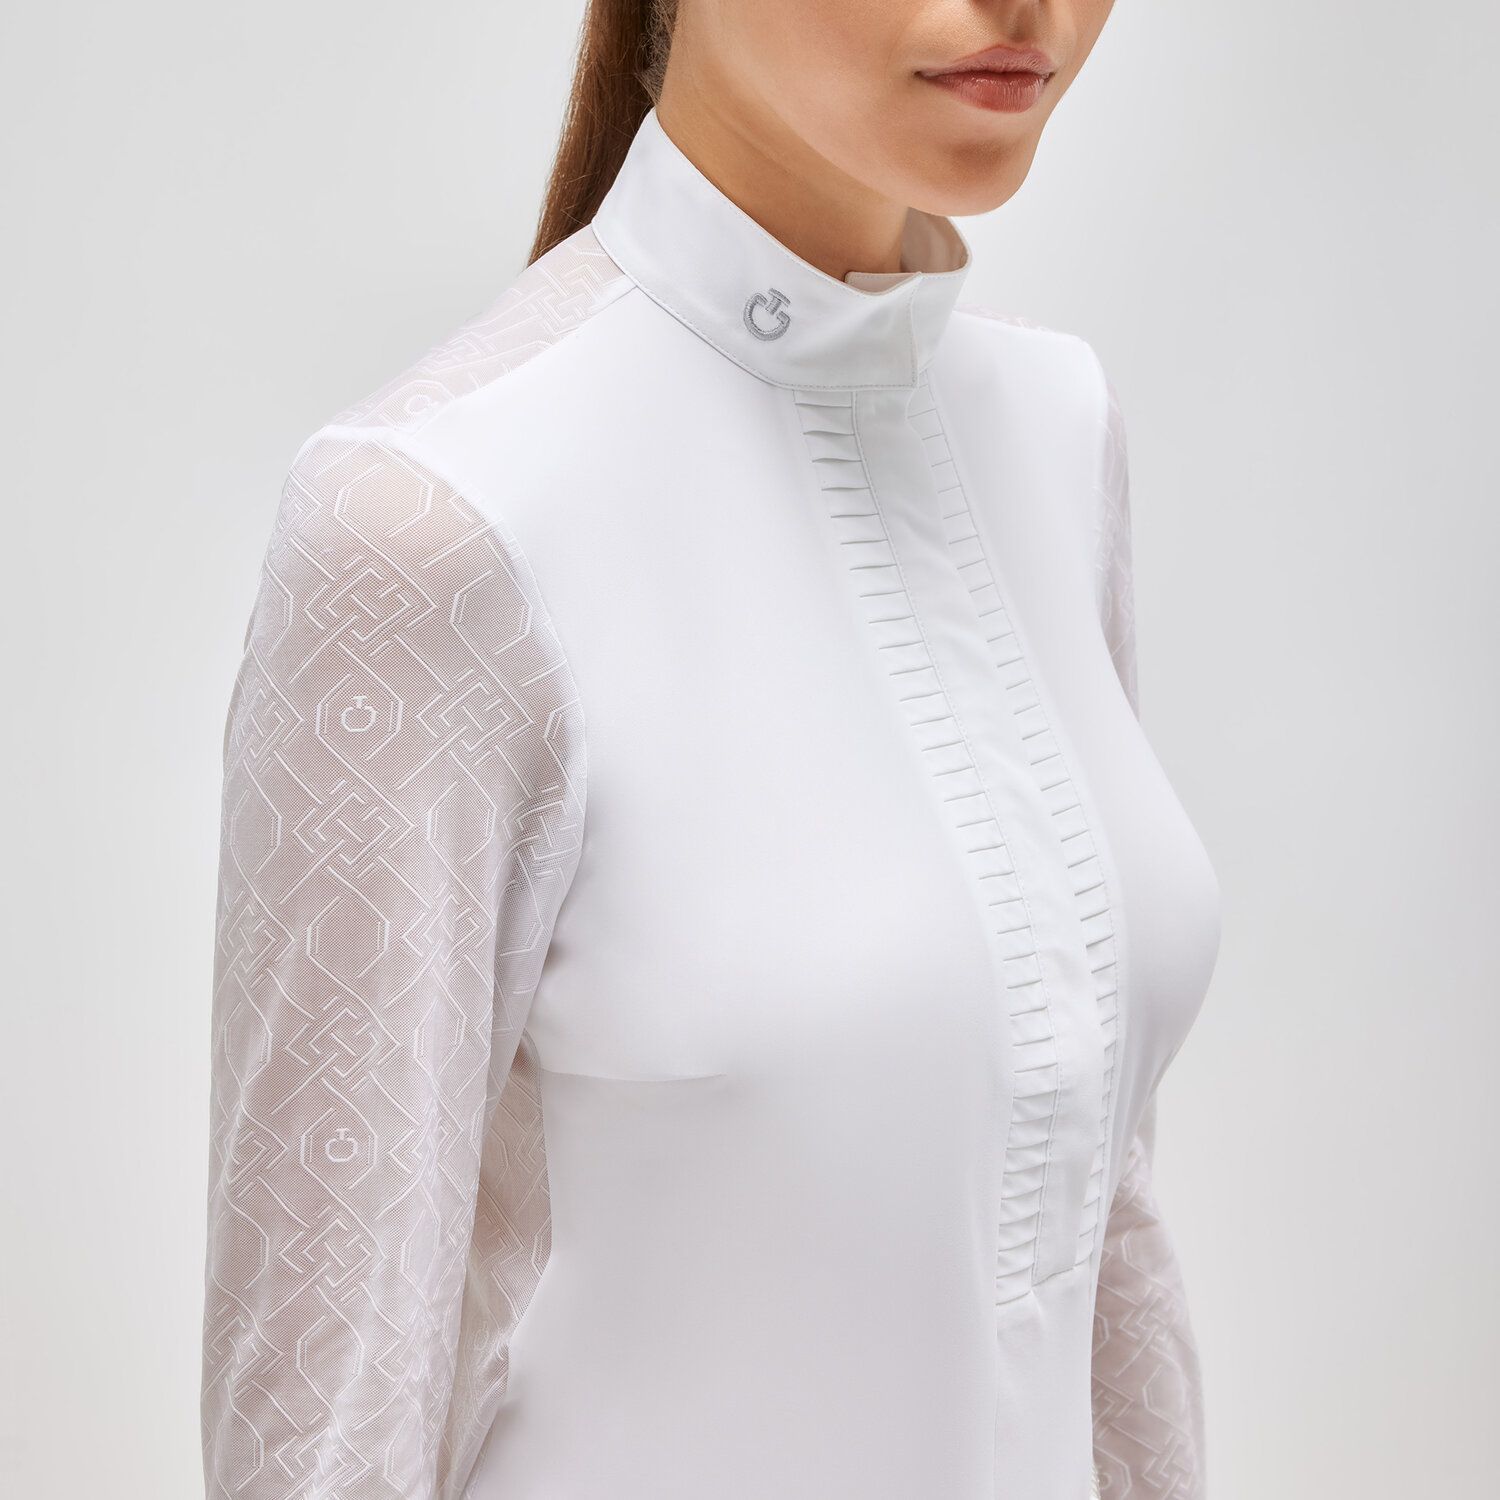 Cavalleria Toscana Women’s jersey show shirt WHITE/KNIT-3